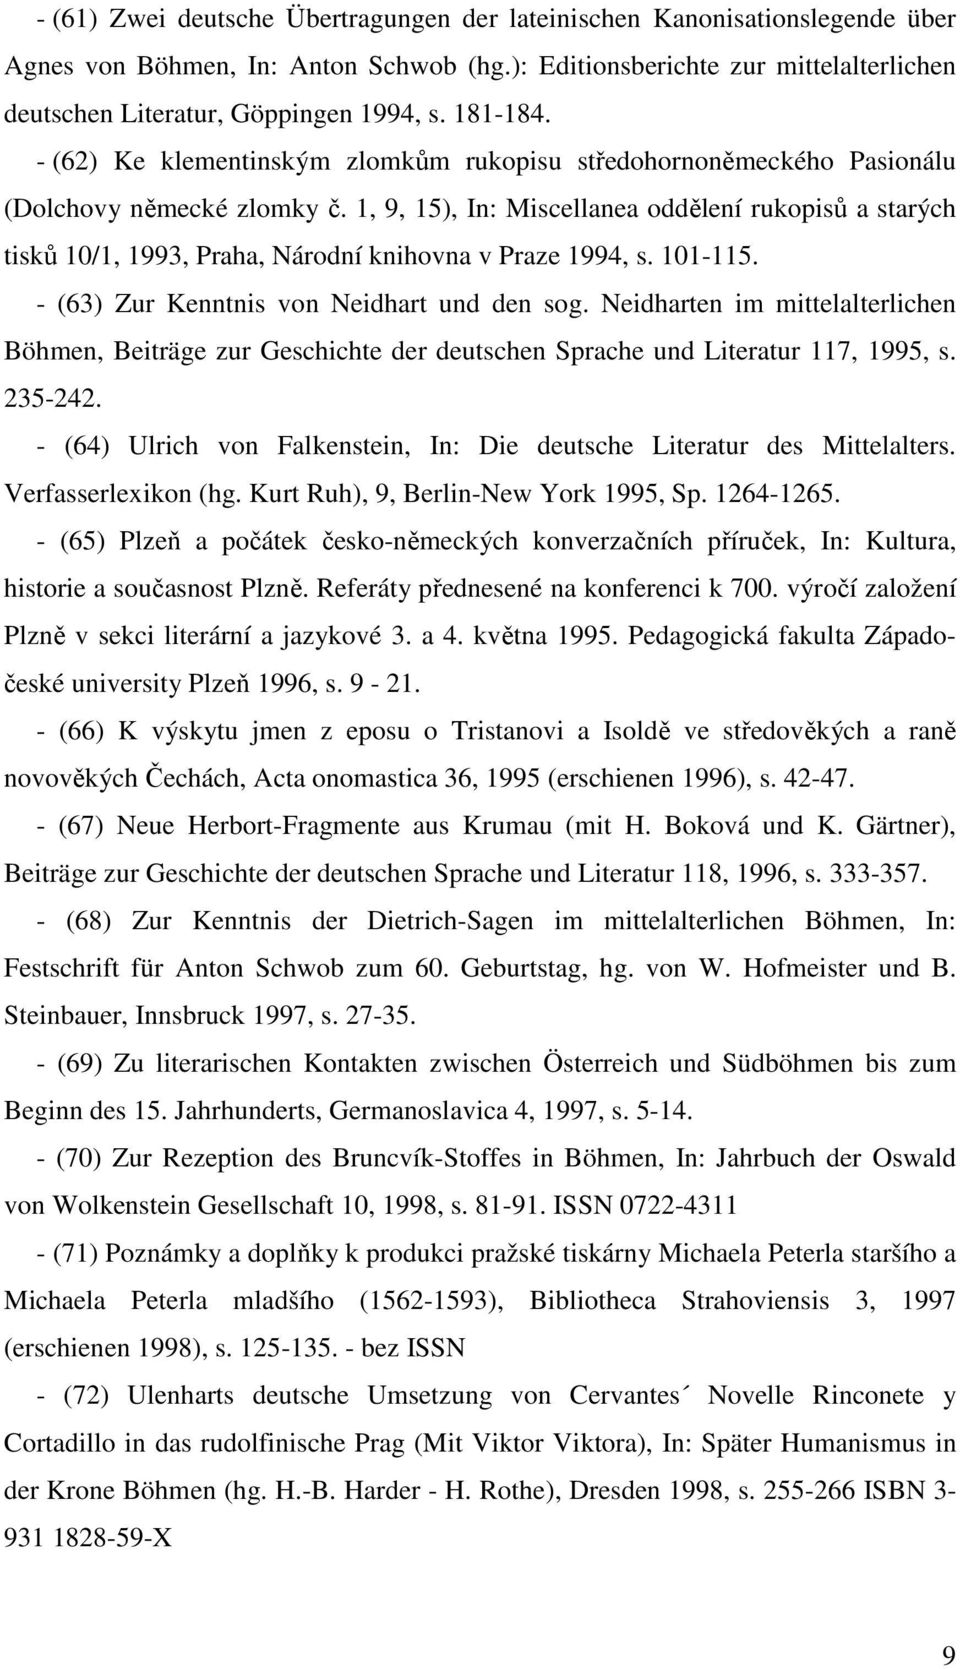 1, 9, 15), In: Miscellanea oddělení rukopisů a starých tisků 10/1, 1993, Praha, Národní knihovna v Praze 1994, s. 101-115. - (63) Zur Kenntnis von Neidhart und den sog.